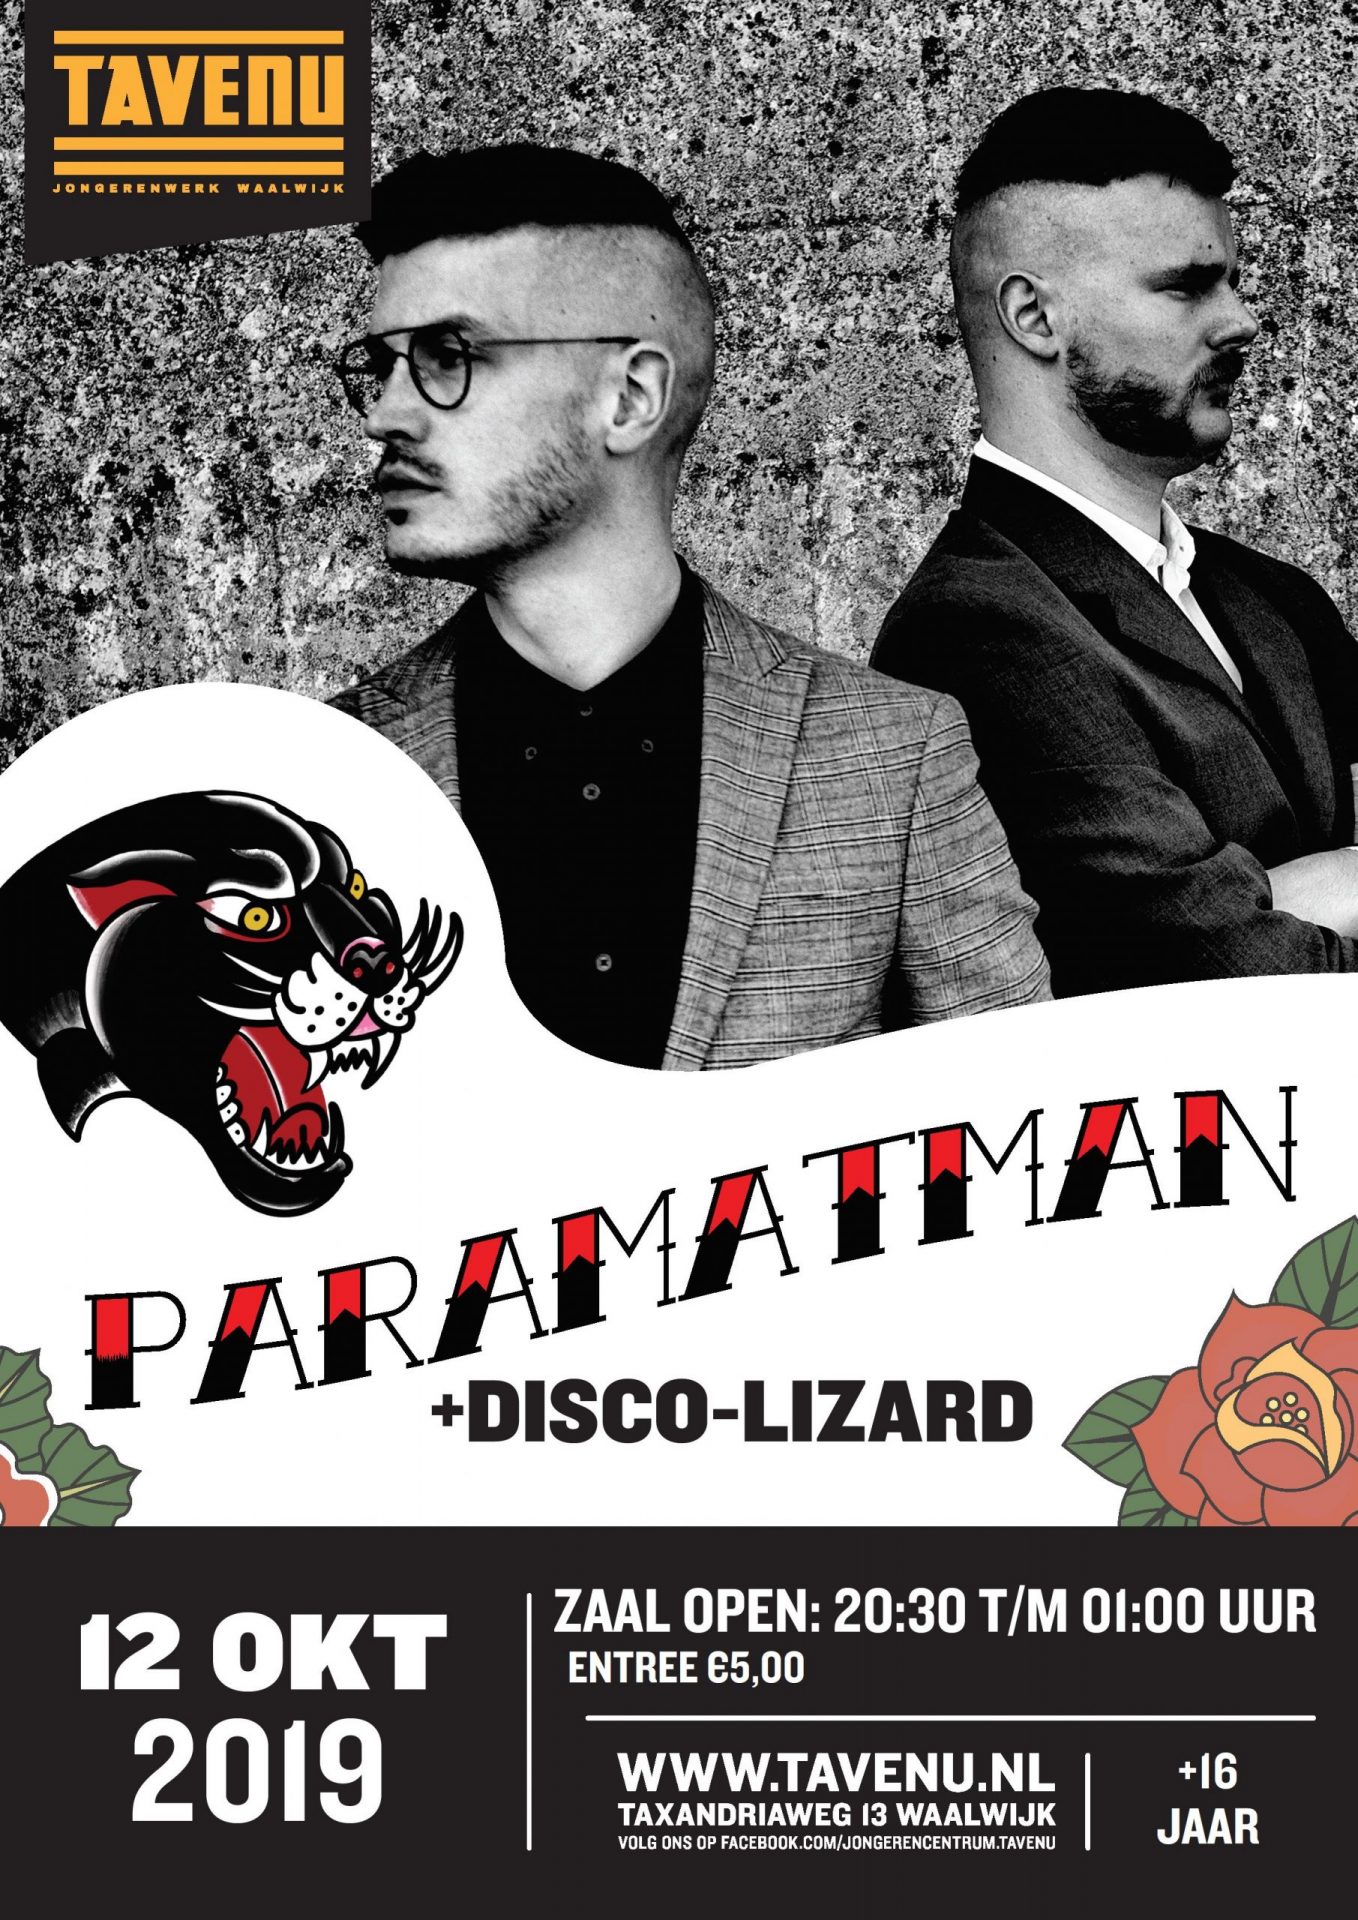 Paramatman & Disco-lizard